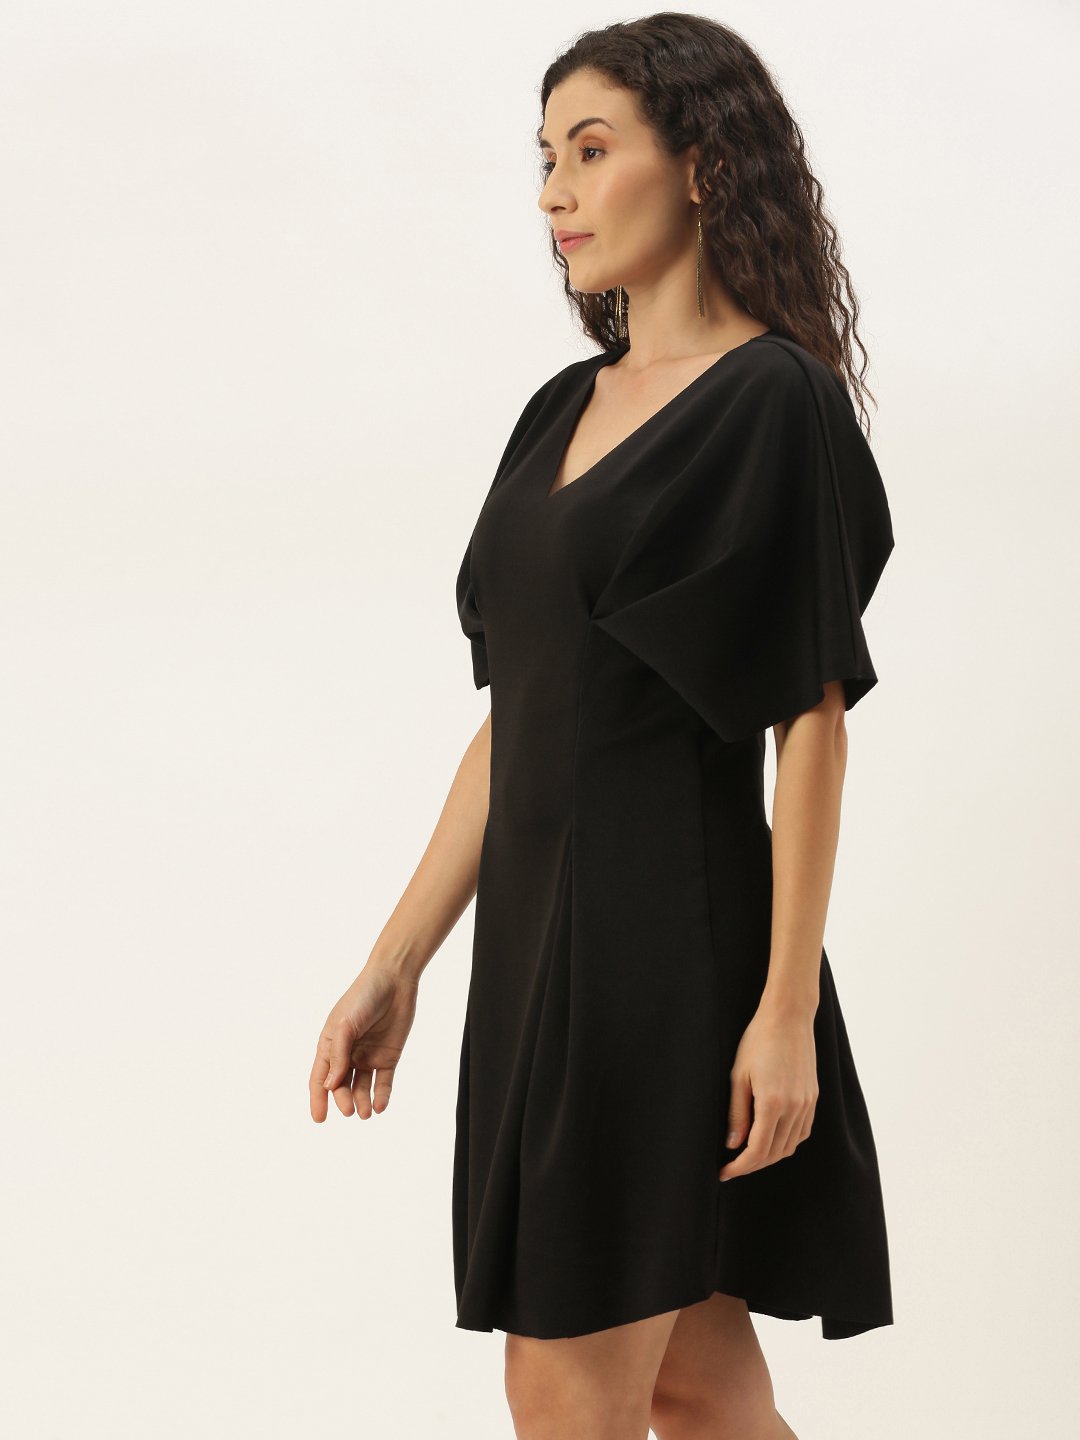 Stylish Black Solid Waisted Dress